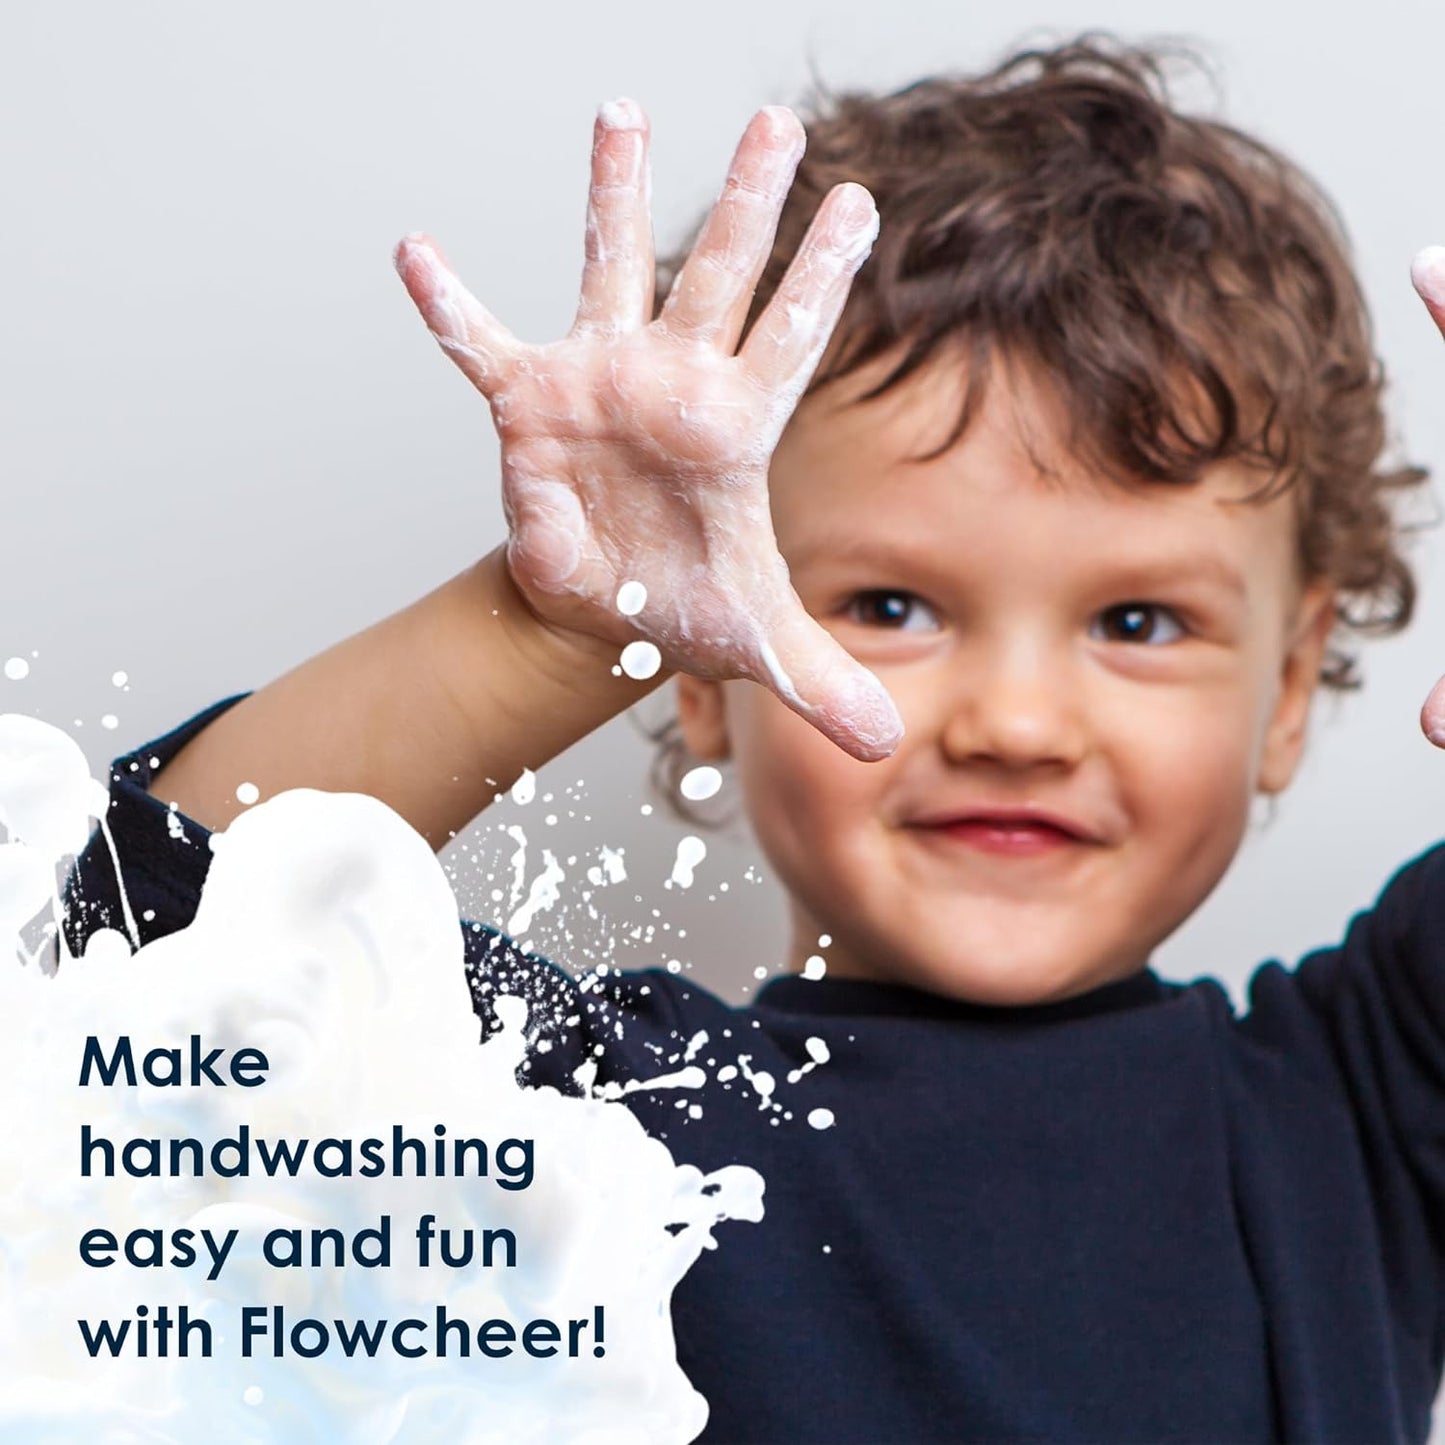 Flowcheer Eco-friendly plastic-free Foaming Hand Soap Refill 12 Tablets - Ocean Breeze Fragrance